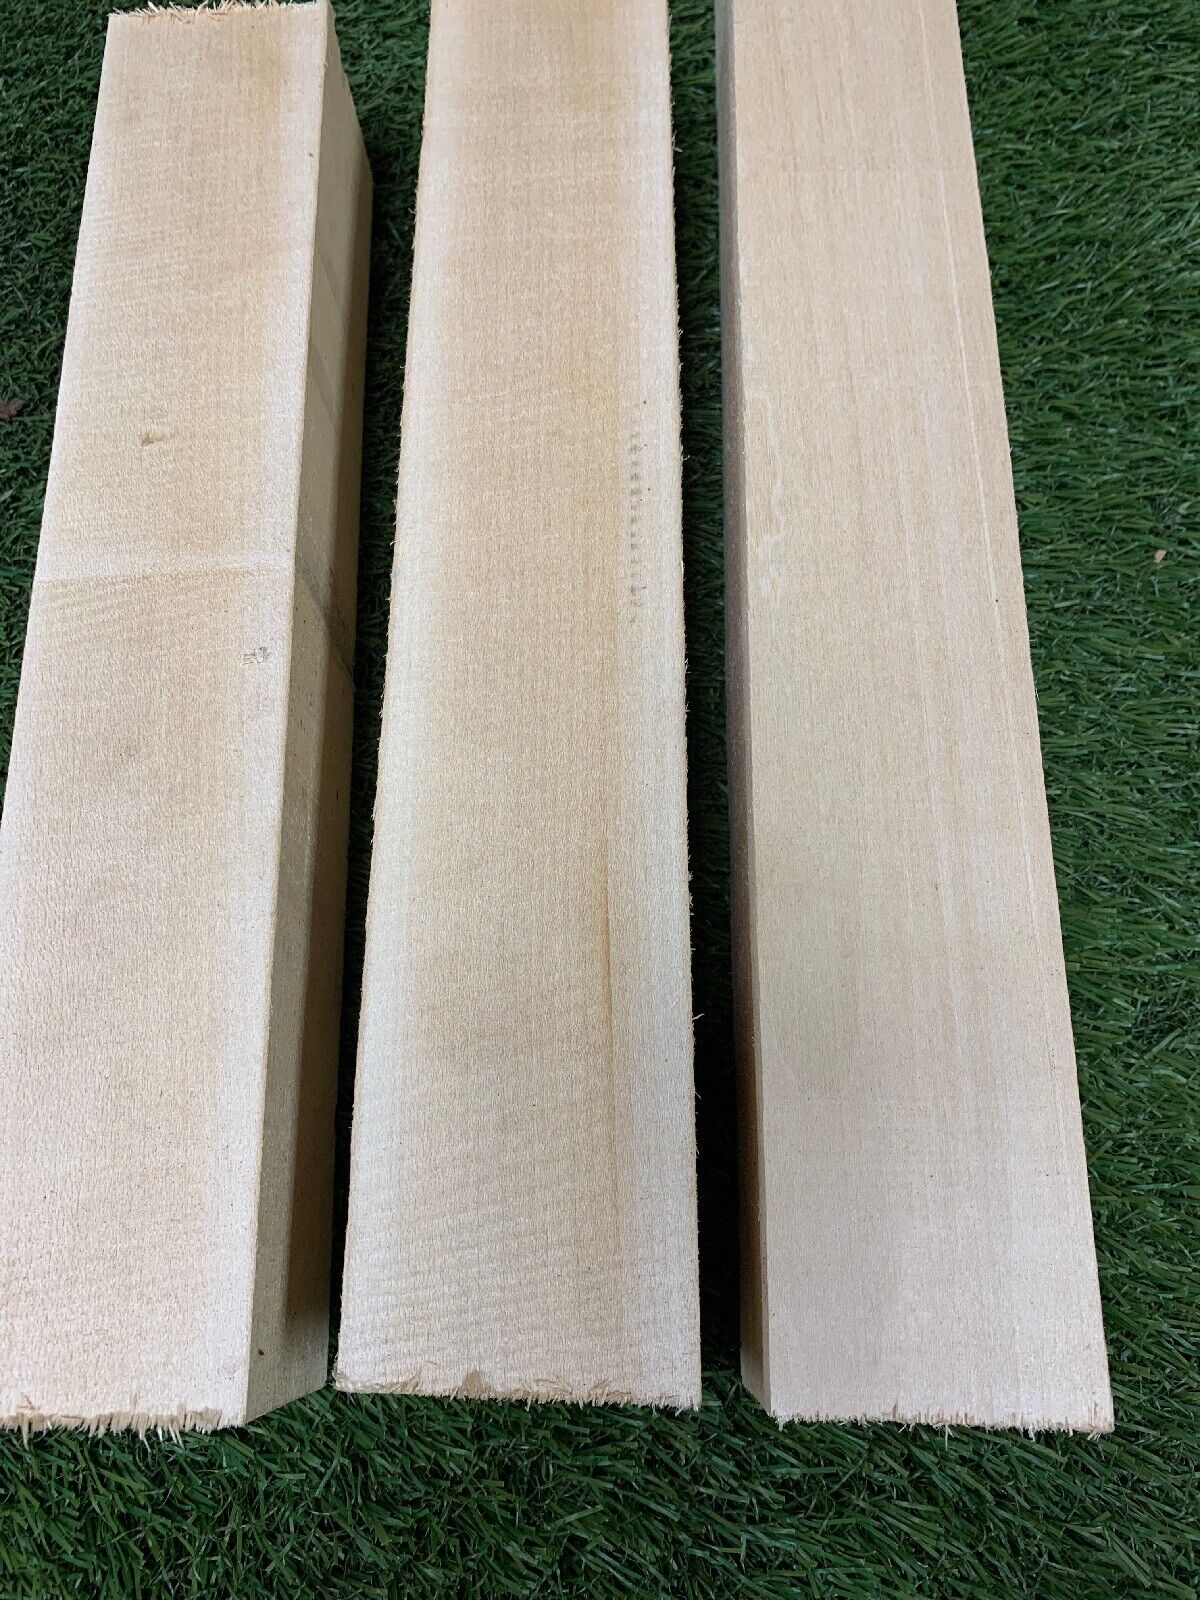 Pack Of 3, Basswood Carving Wood Blocks | Turning Wood Blanks | 2" x 3" x 12" EXOTIC WOOD ZONE Carving Blocks Craft Wood Lumber - фотография #3